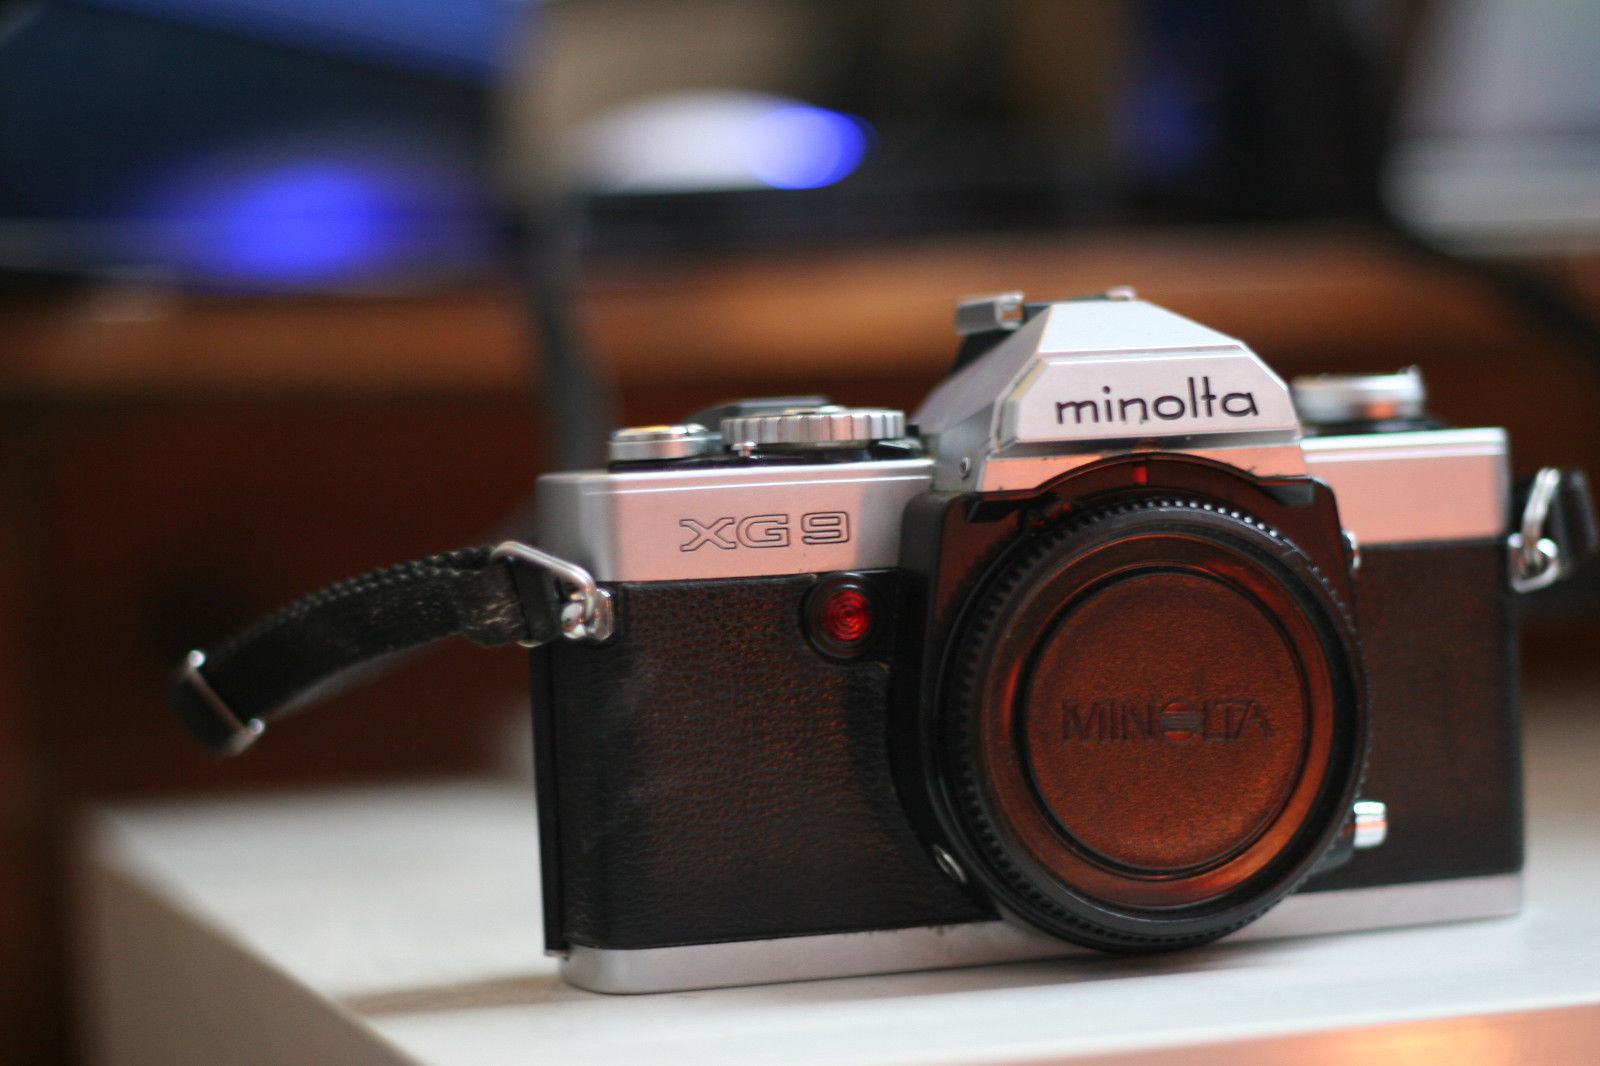 Spiegelreflexkamera minolta XG-9